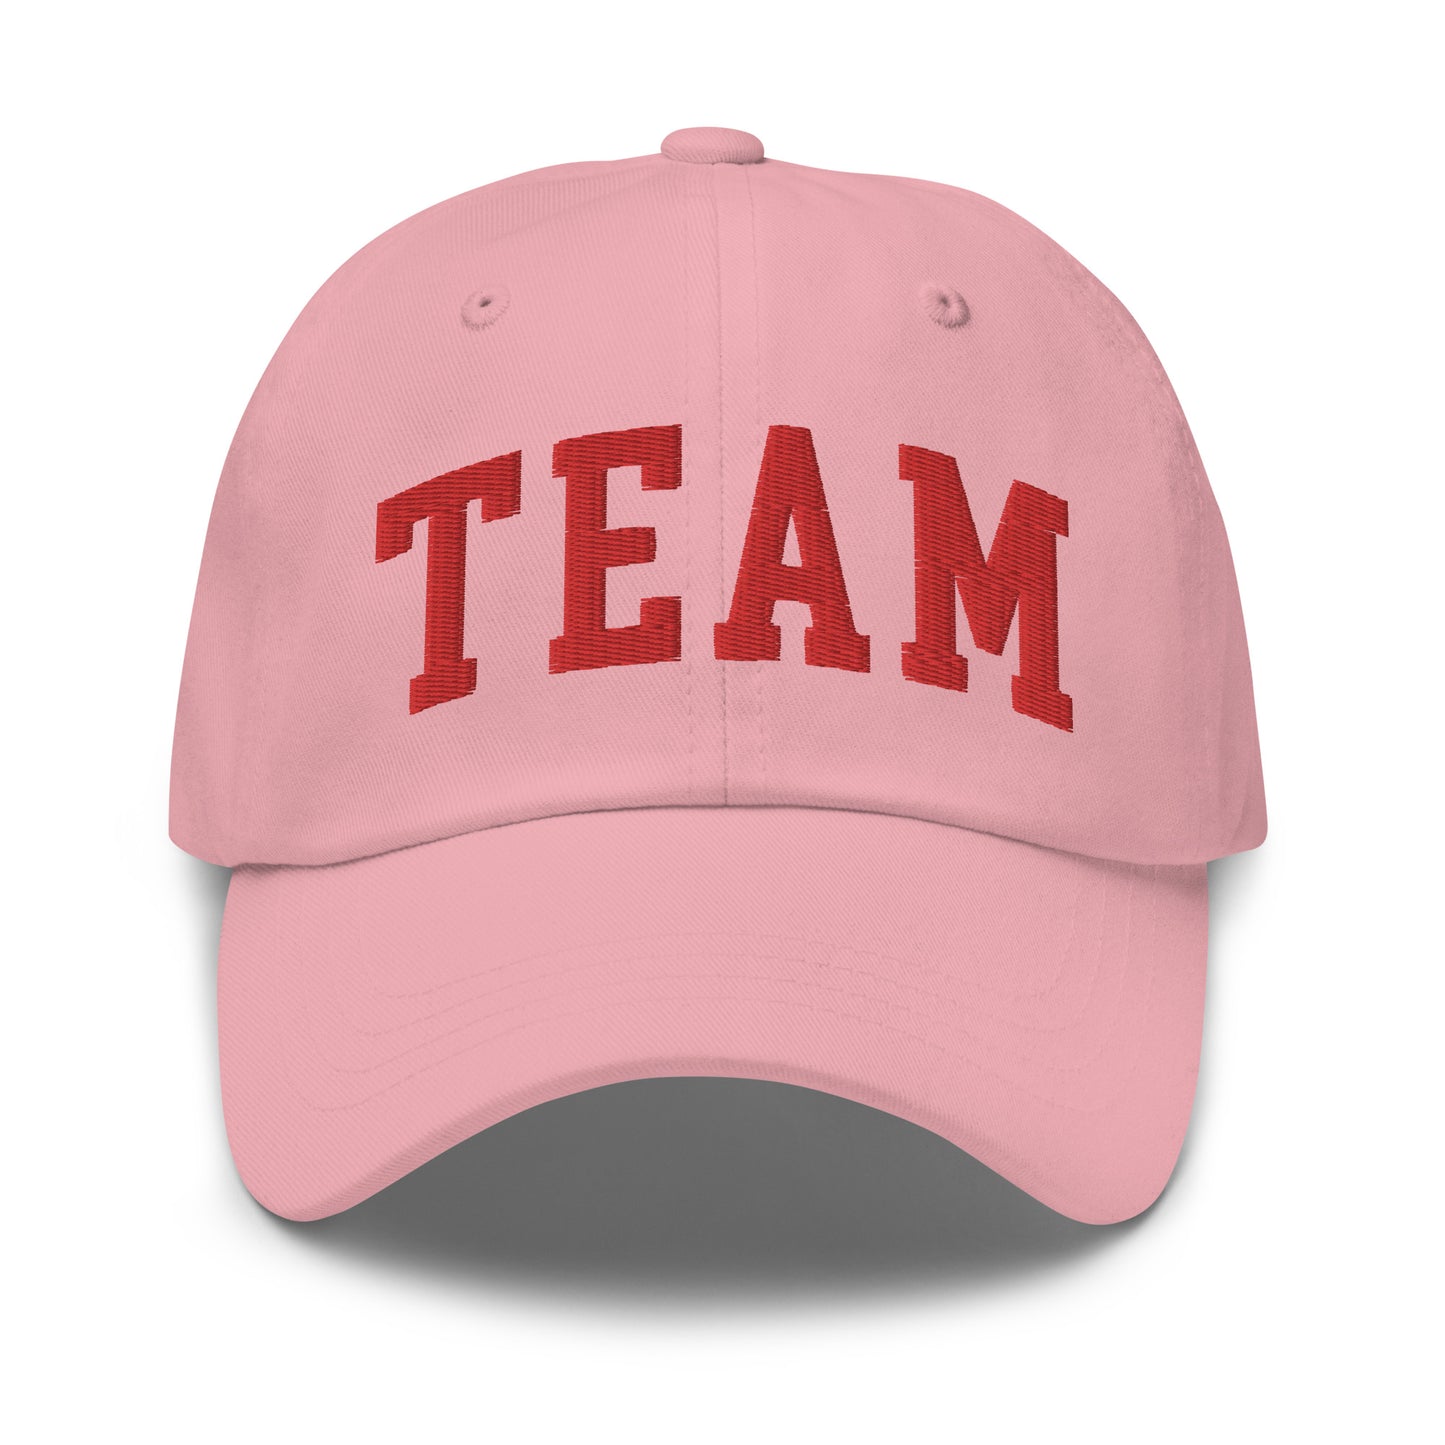 Team hat